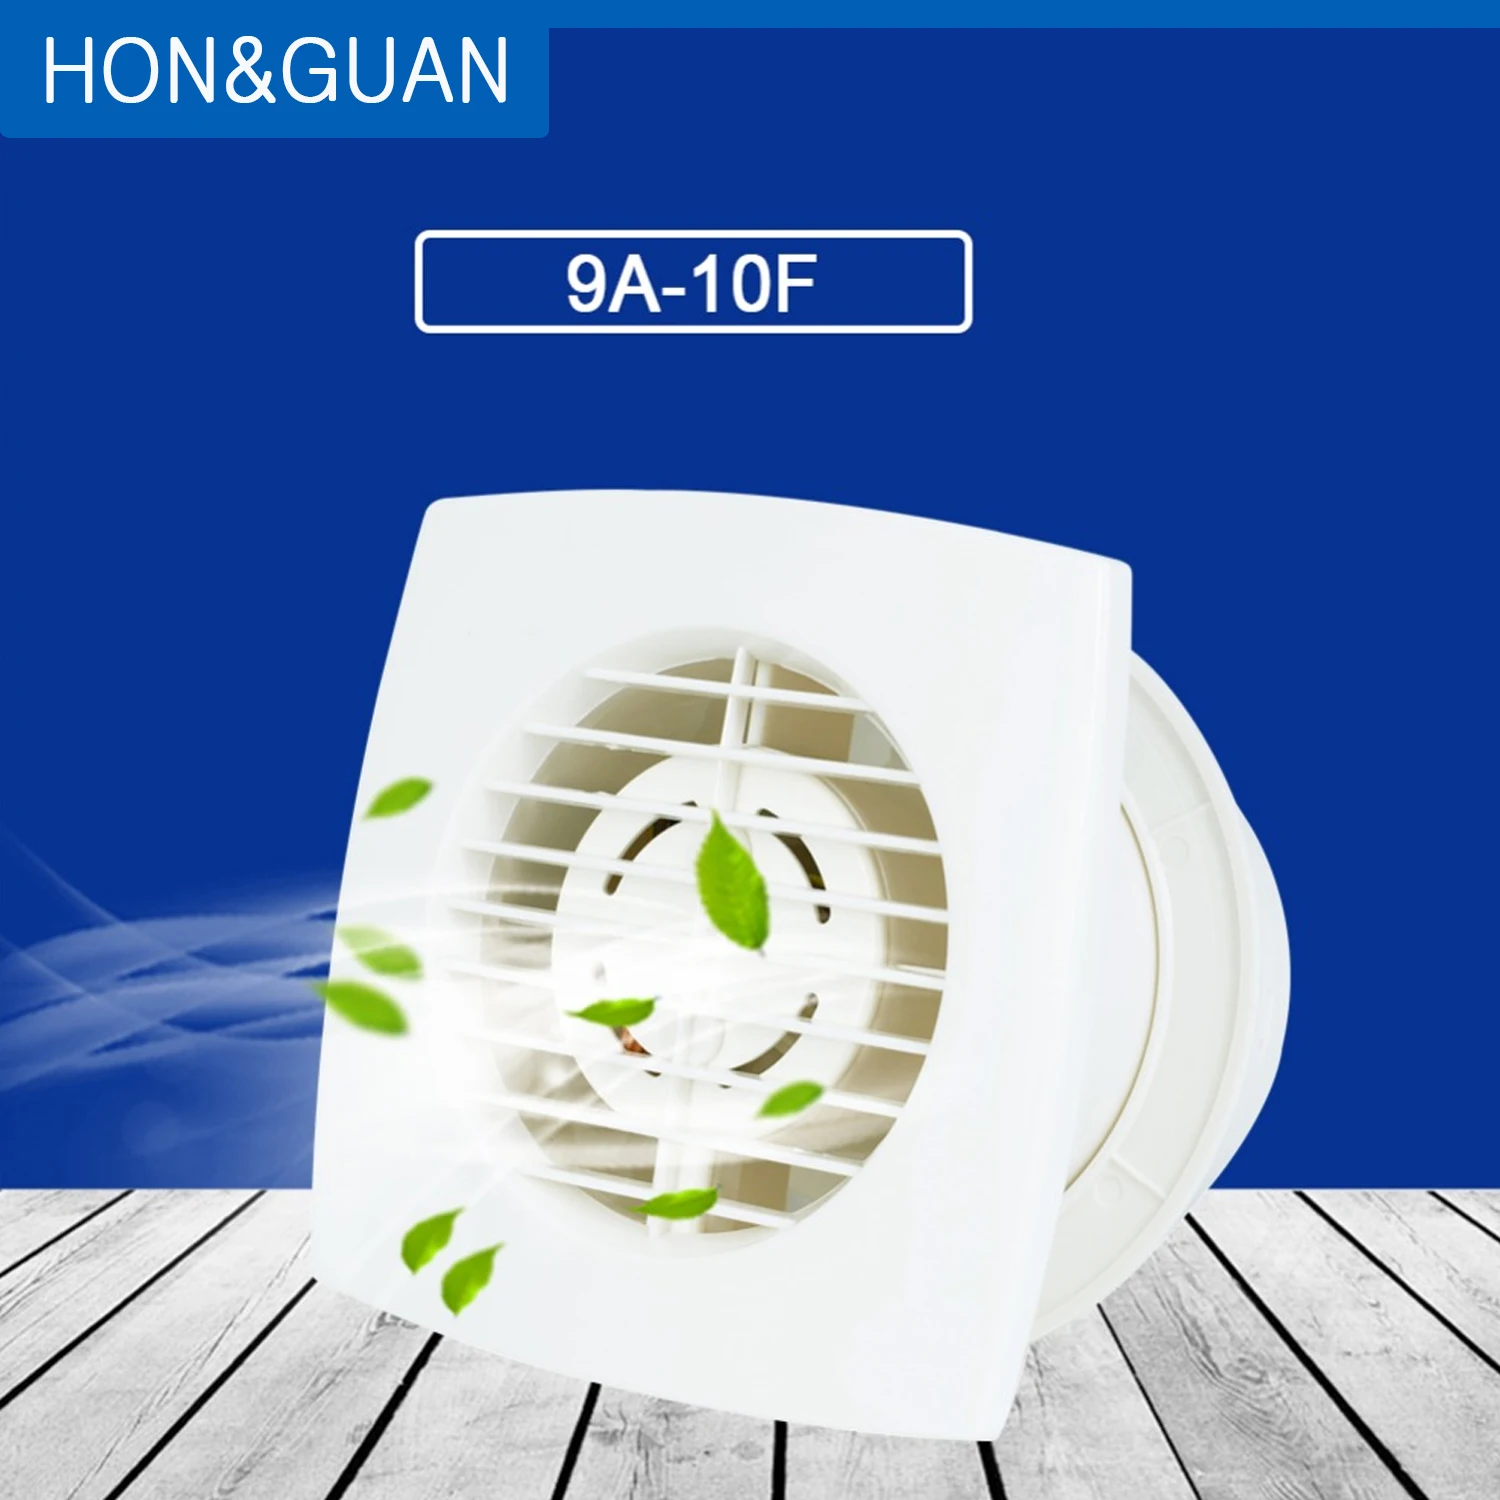 Us 19 99 Hon Guan 4 Air Circulator Bathroom Garage Exhaust Fan Wall Mount Ceiling Mounted Fan Built In Household Ventilation Fans In Exhaust